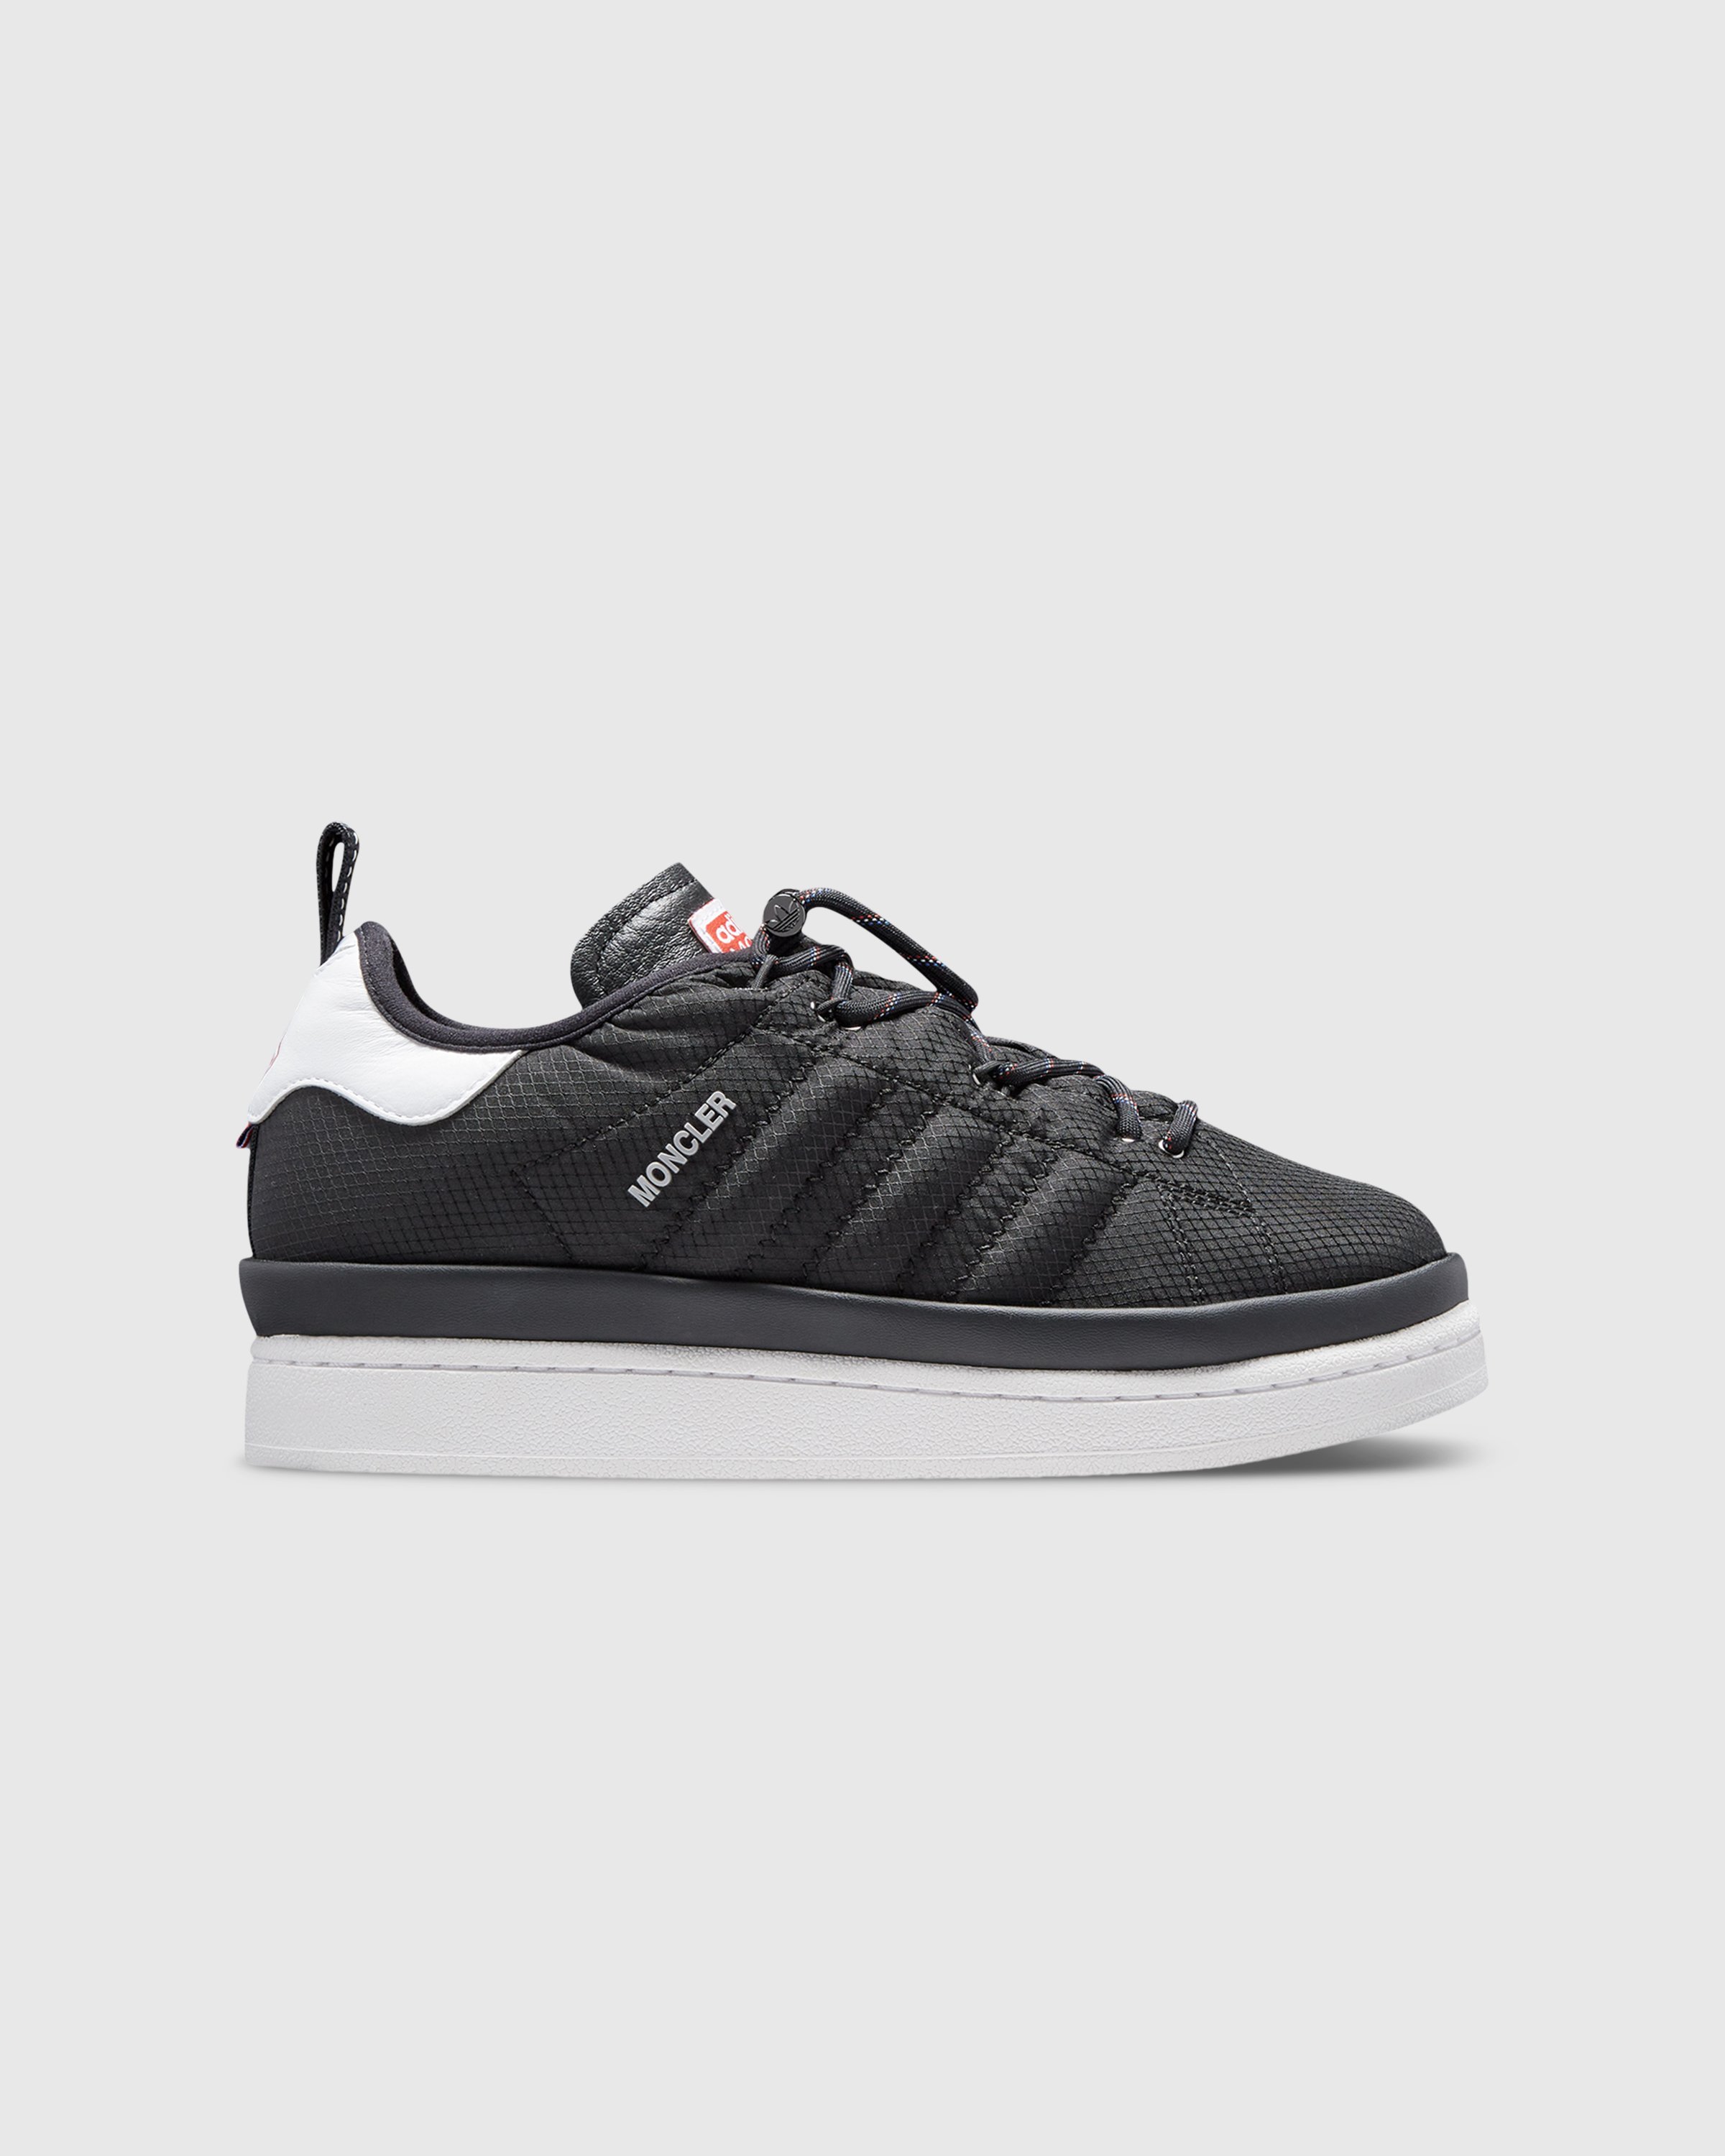 Moncler x adidas Originals - Campus Low Top Sneakers Black - Footwear - Black - Image 1